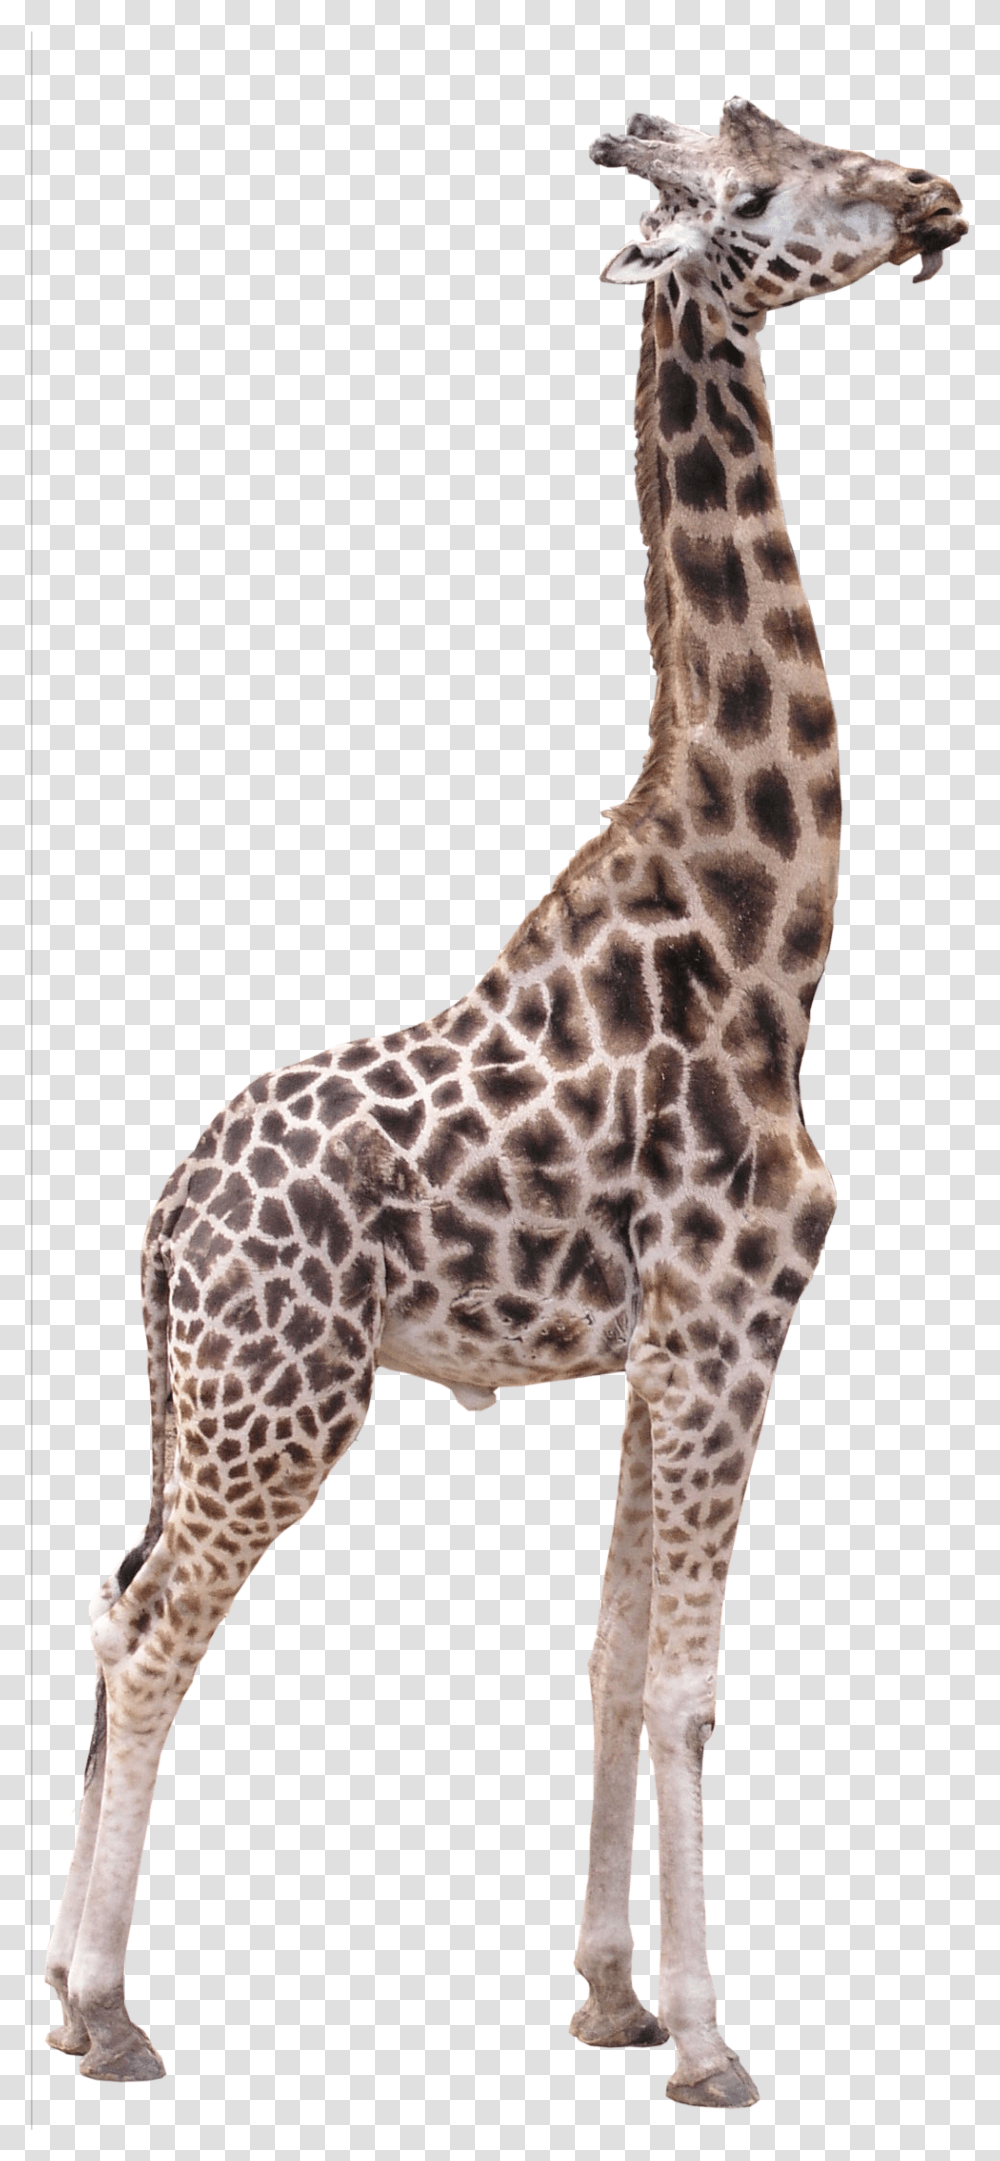 Download 15 Giraffe For Giraffe Image Background, Wildlife, Mammal, Animal Transparent Png